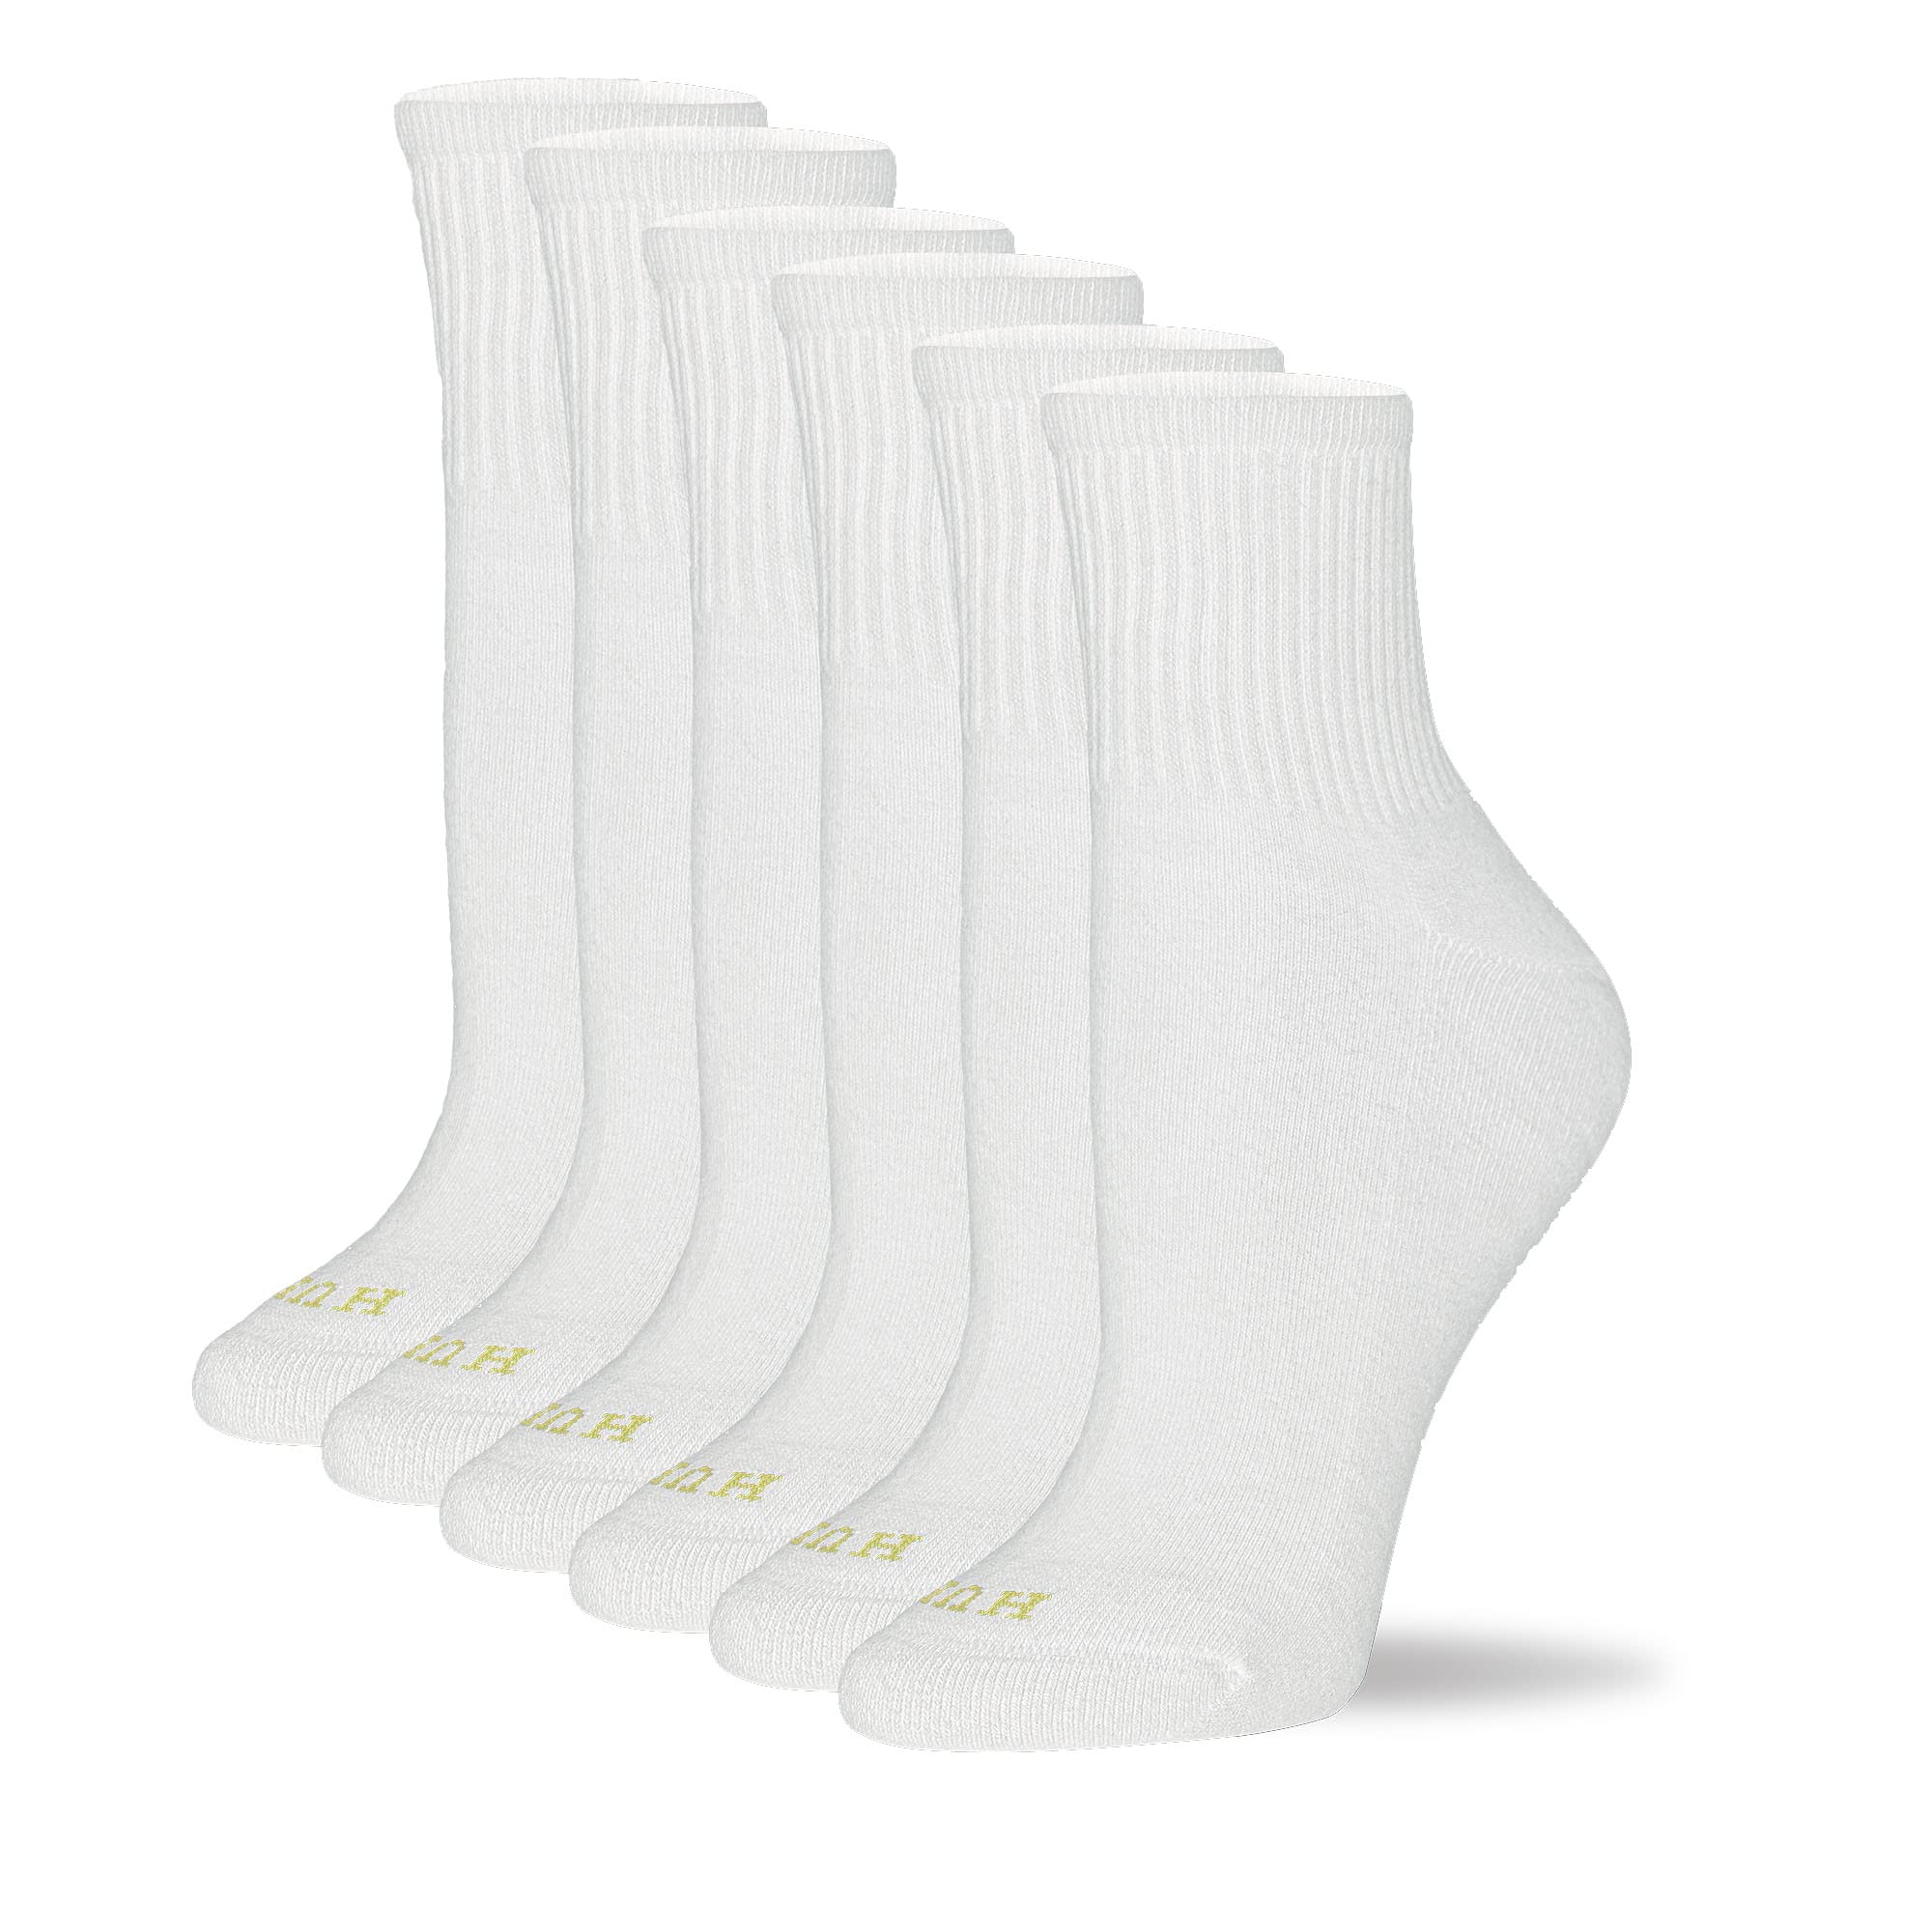 HUE Women's Cotton Mini Crew Socks - Size 6-10 - Ladies Athletic Cushioned Workout Socks